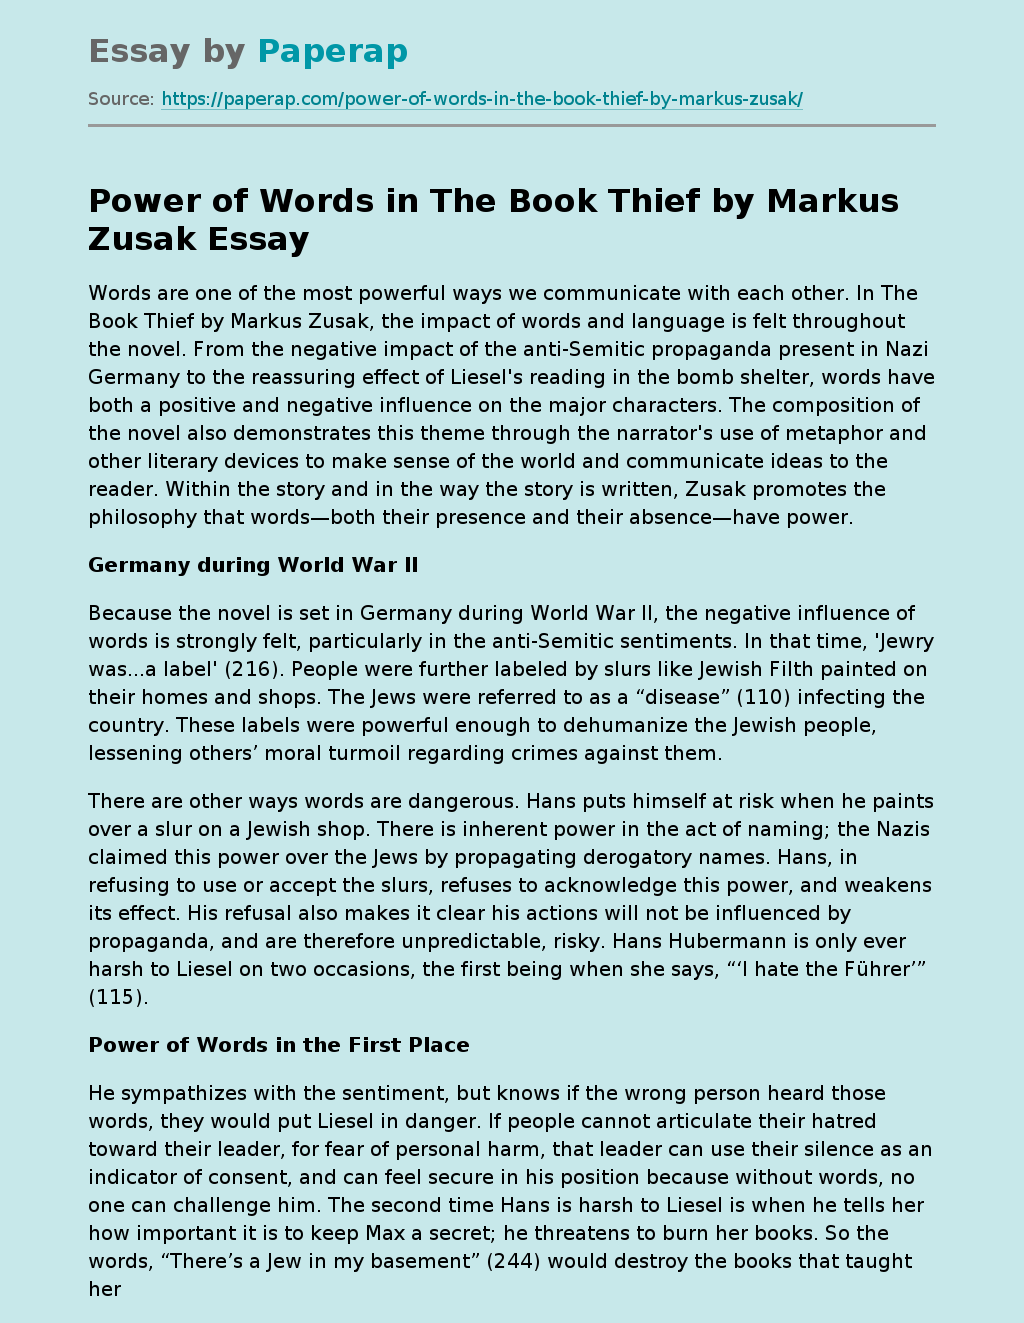 Power of Words in The Book Thief by Markus Zusak